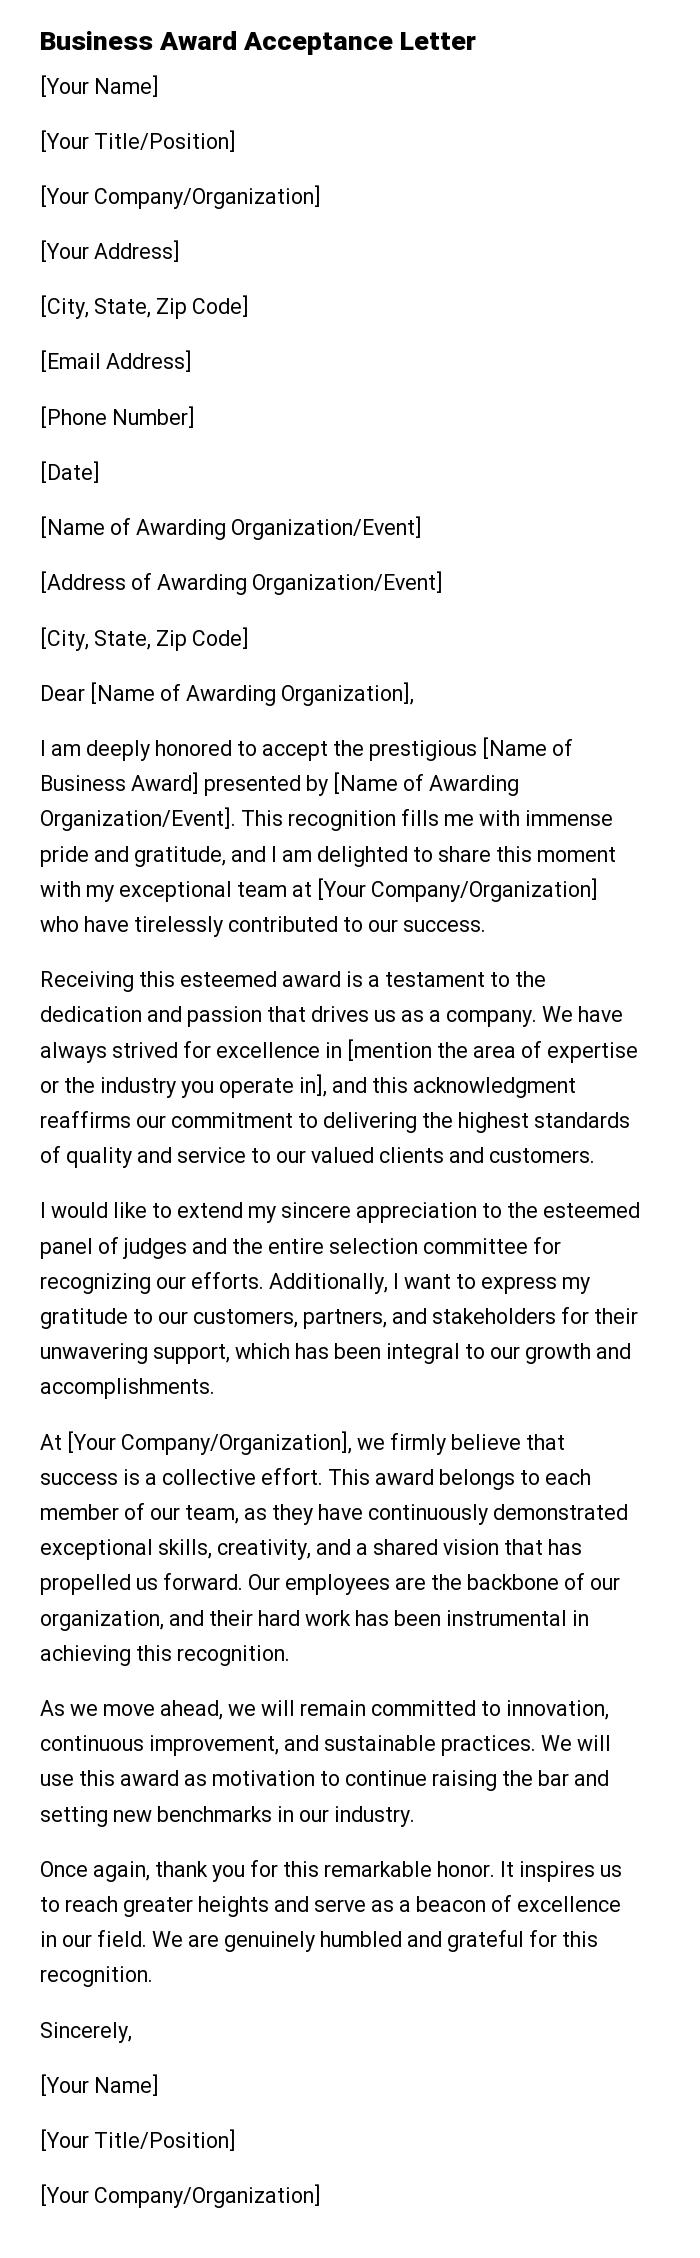 Business Award Acceptance Letter